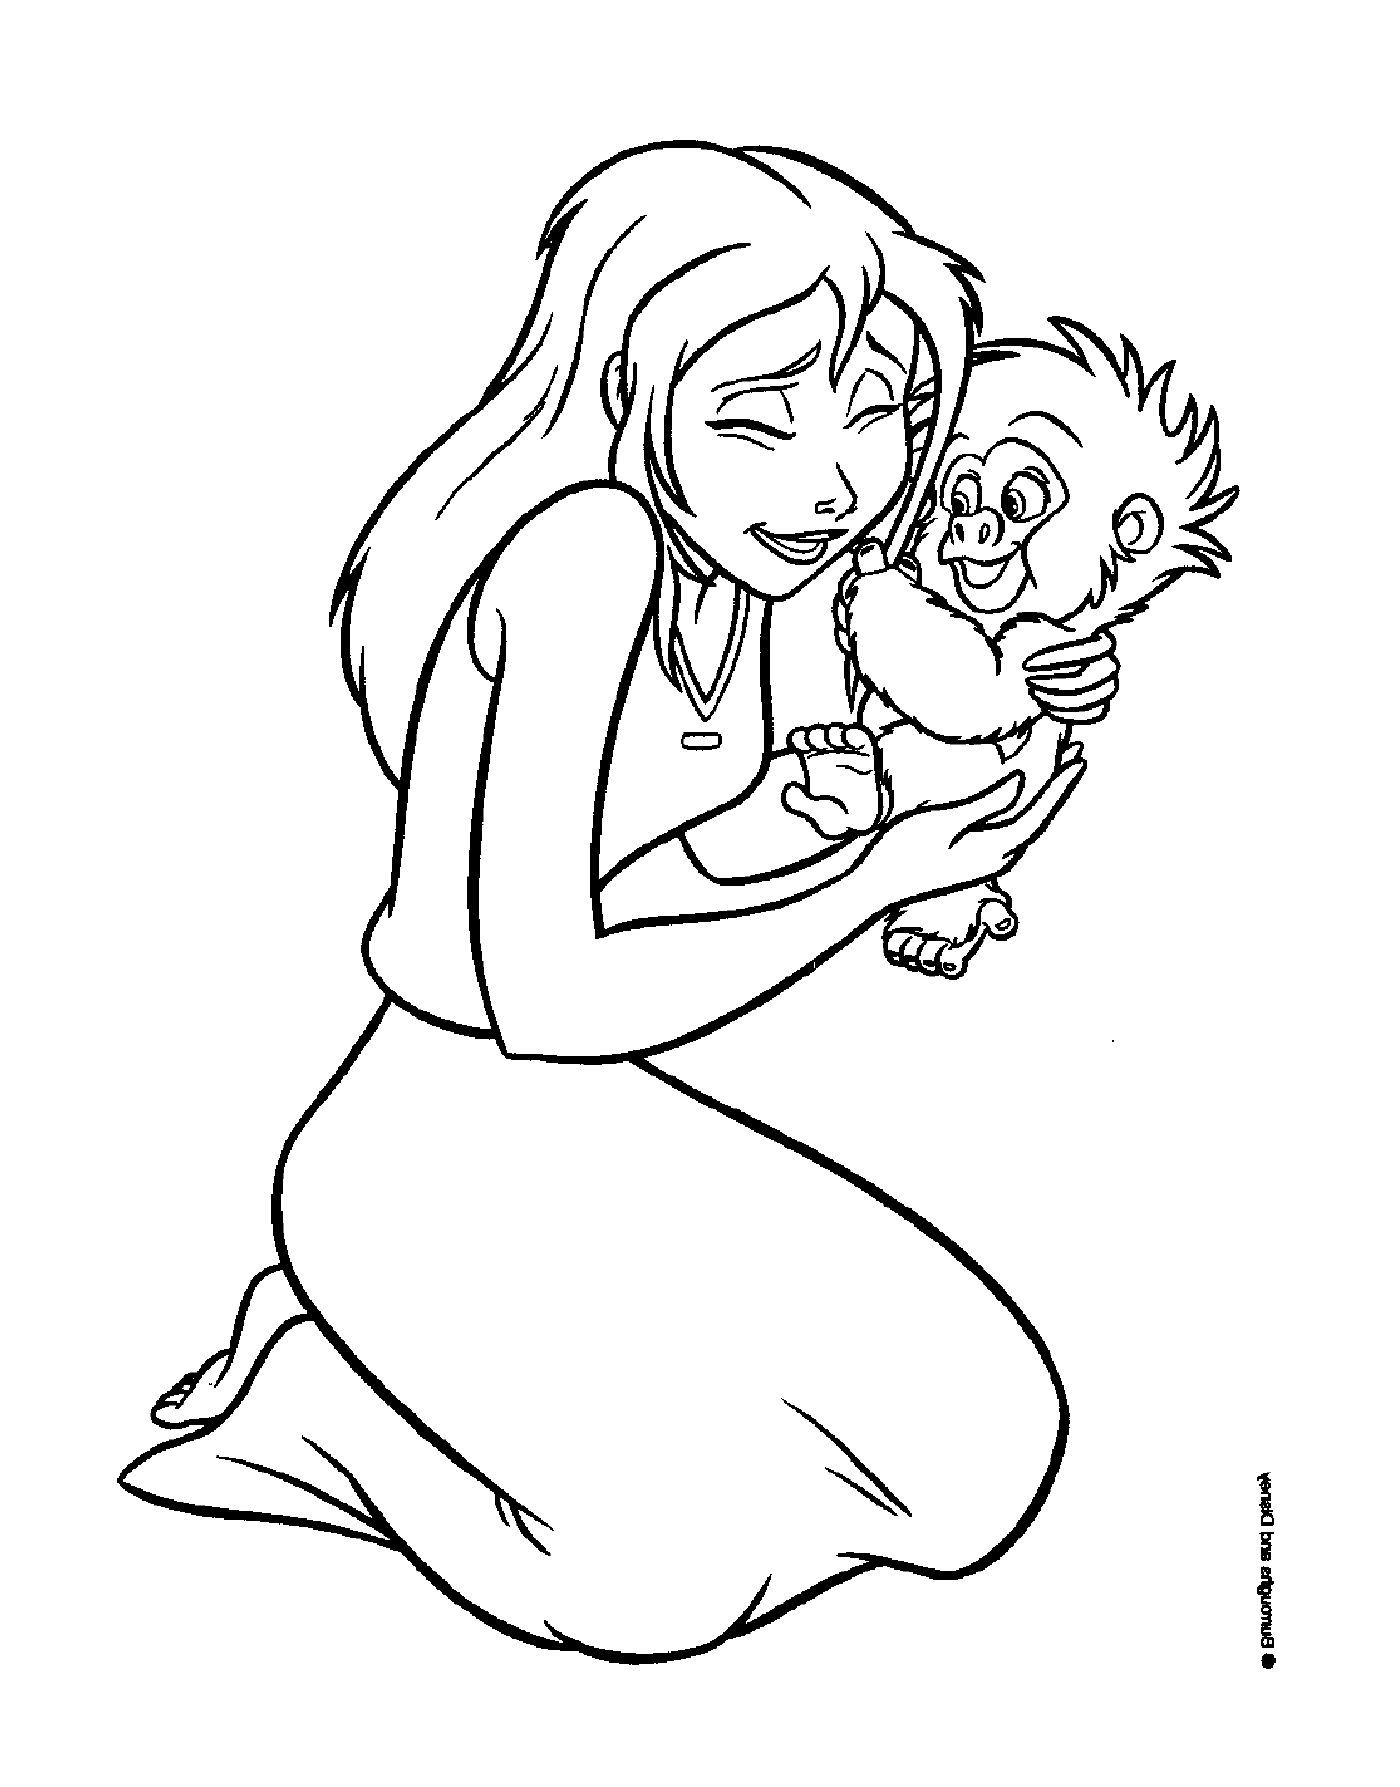  امرأة تحمل طفلاً رضيعاً قرداً بين ذراعيها 